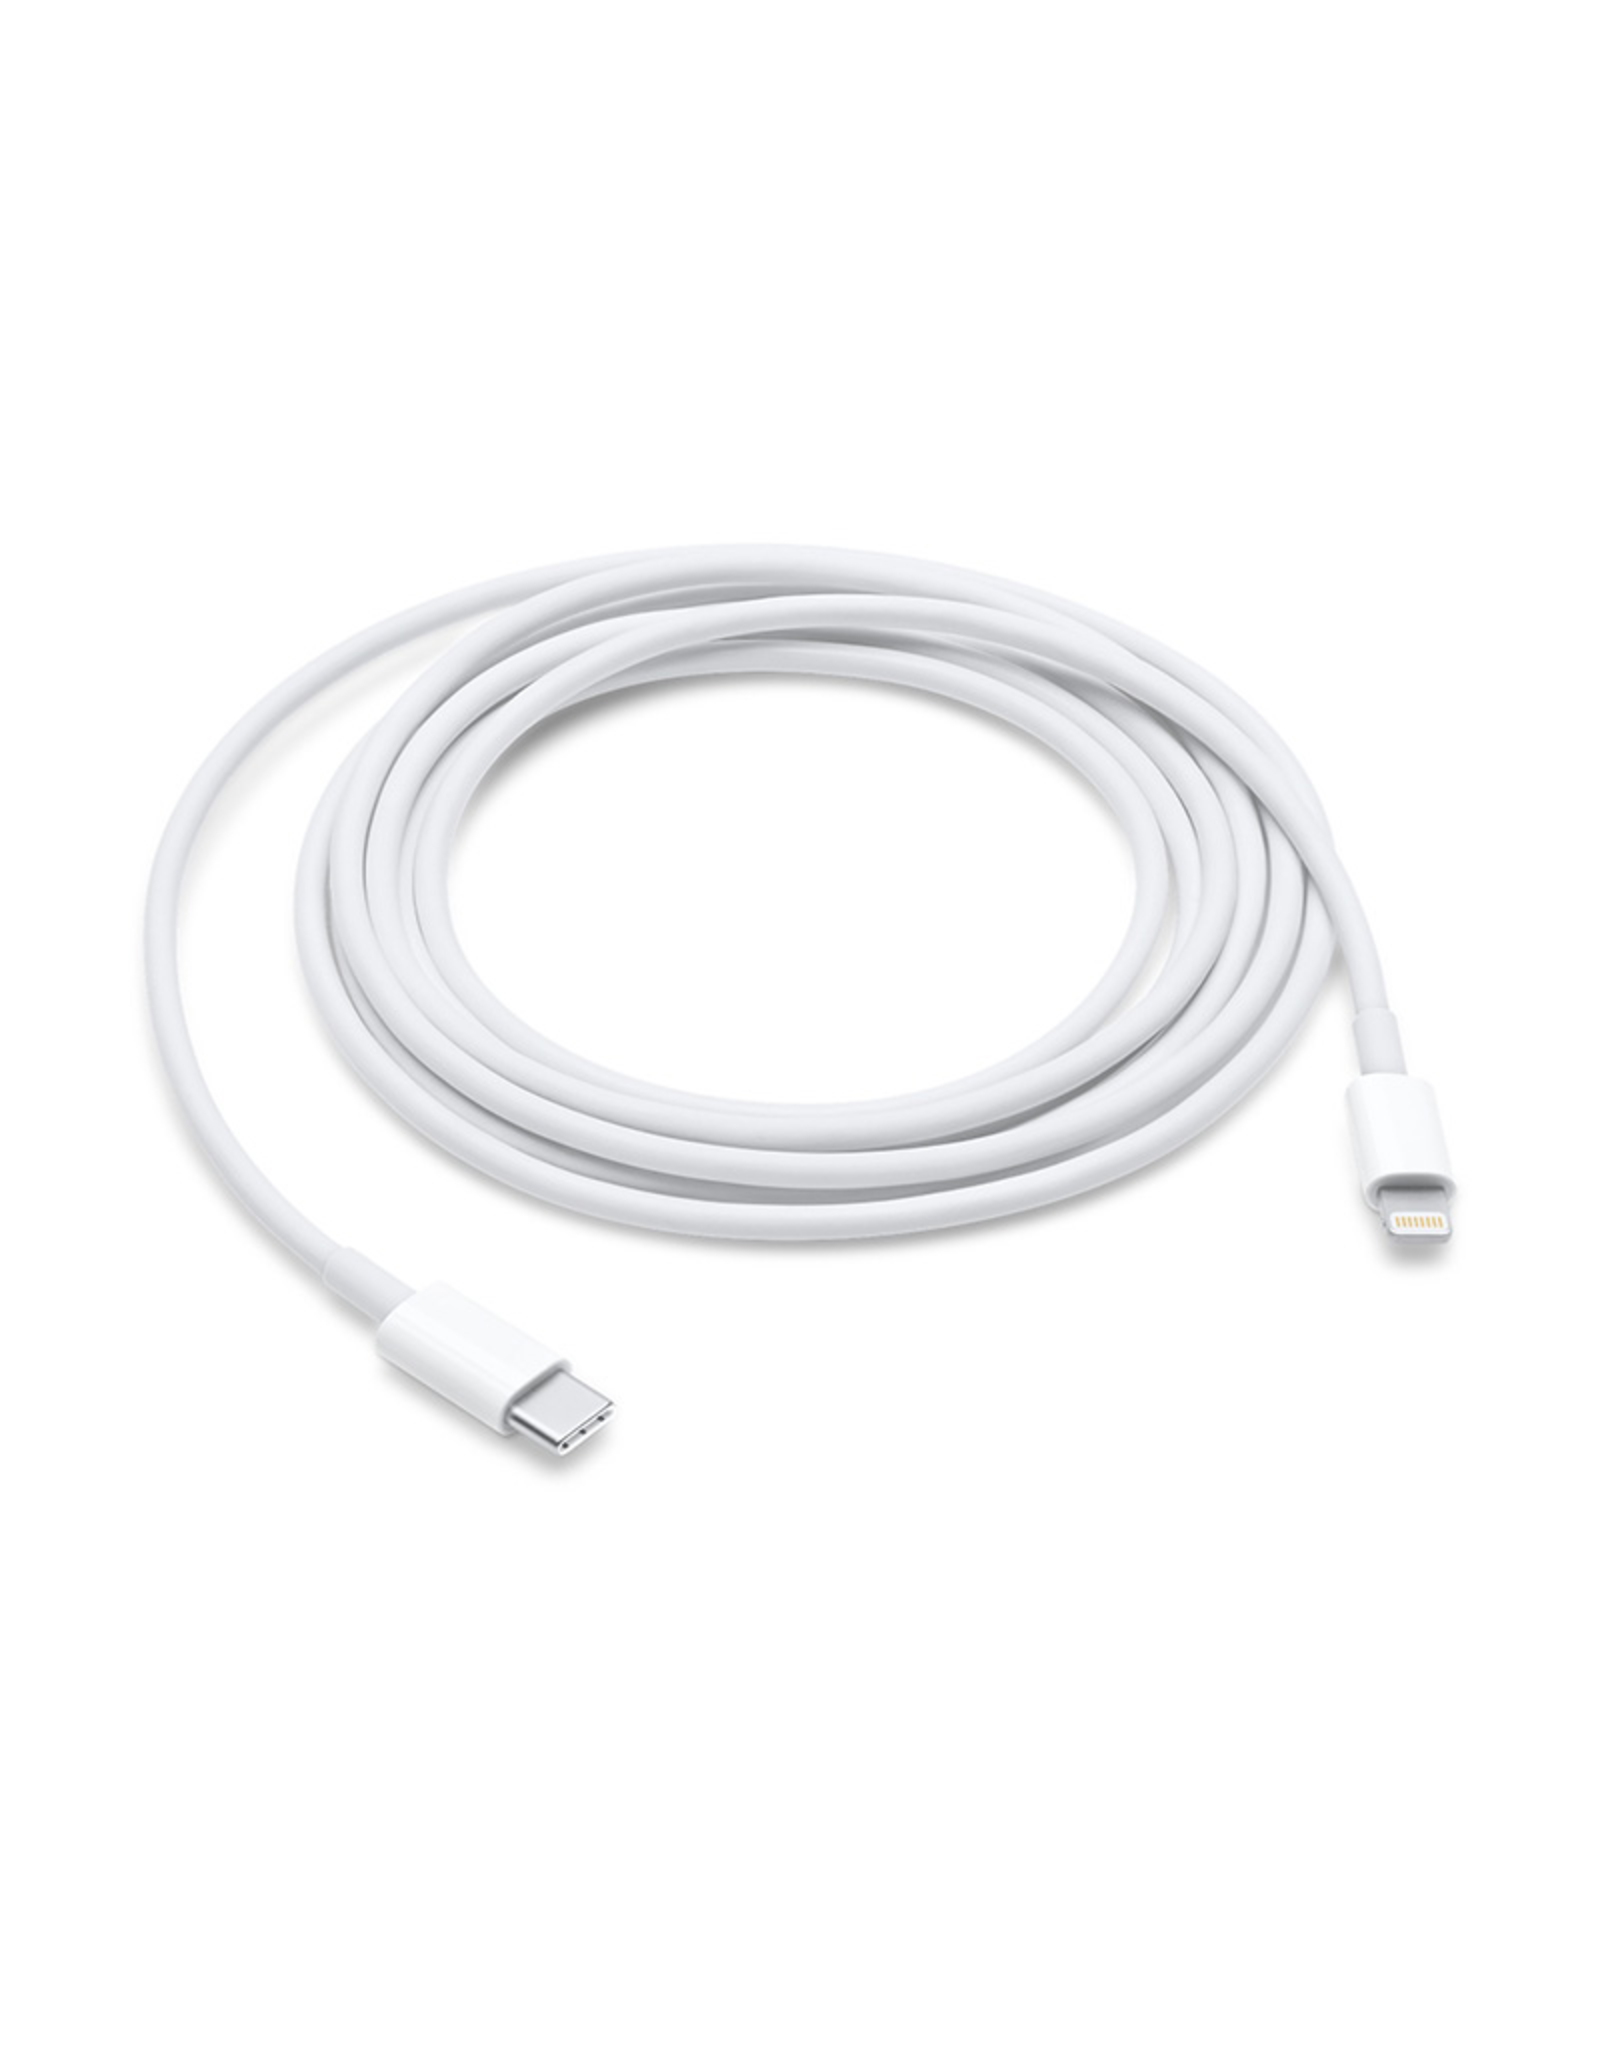 Apple Apple USB-C to Lightning Cable (2m)